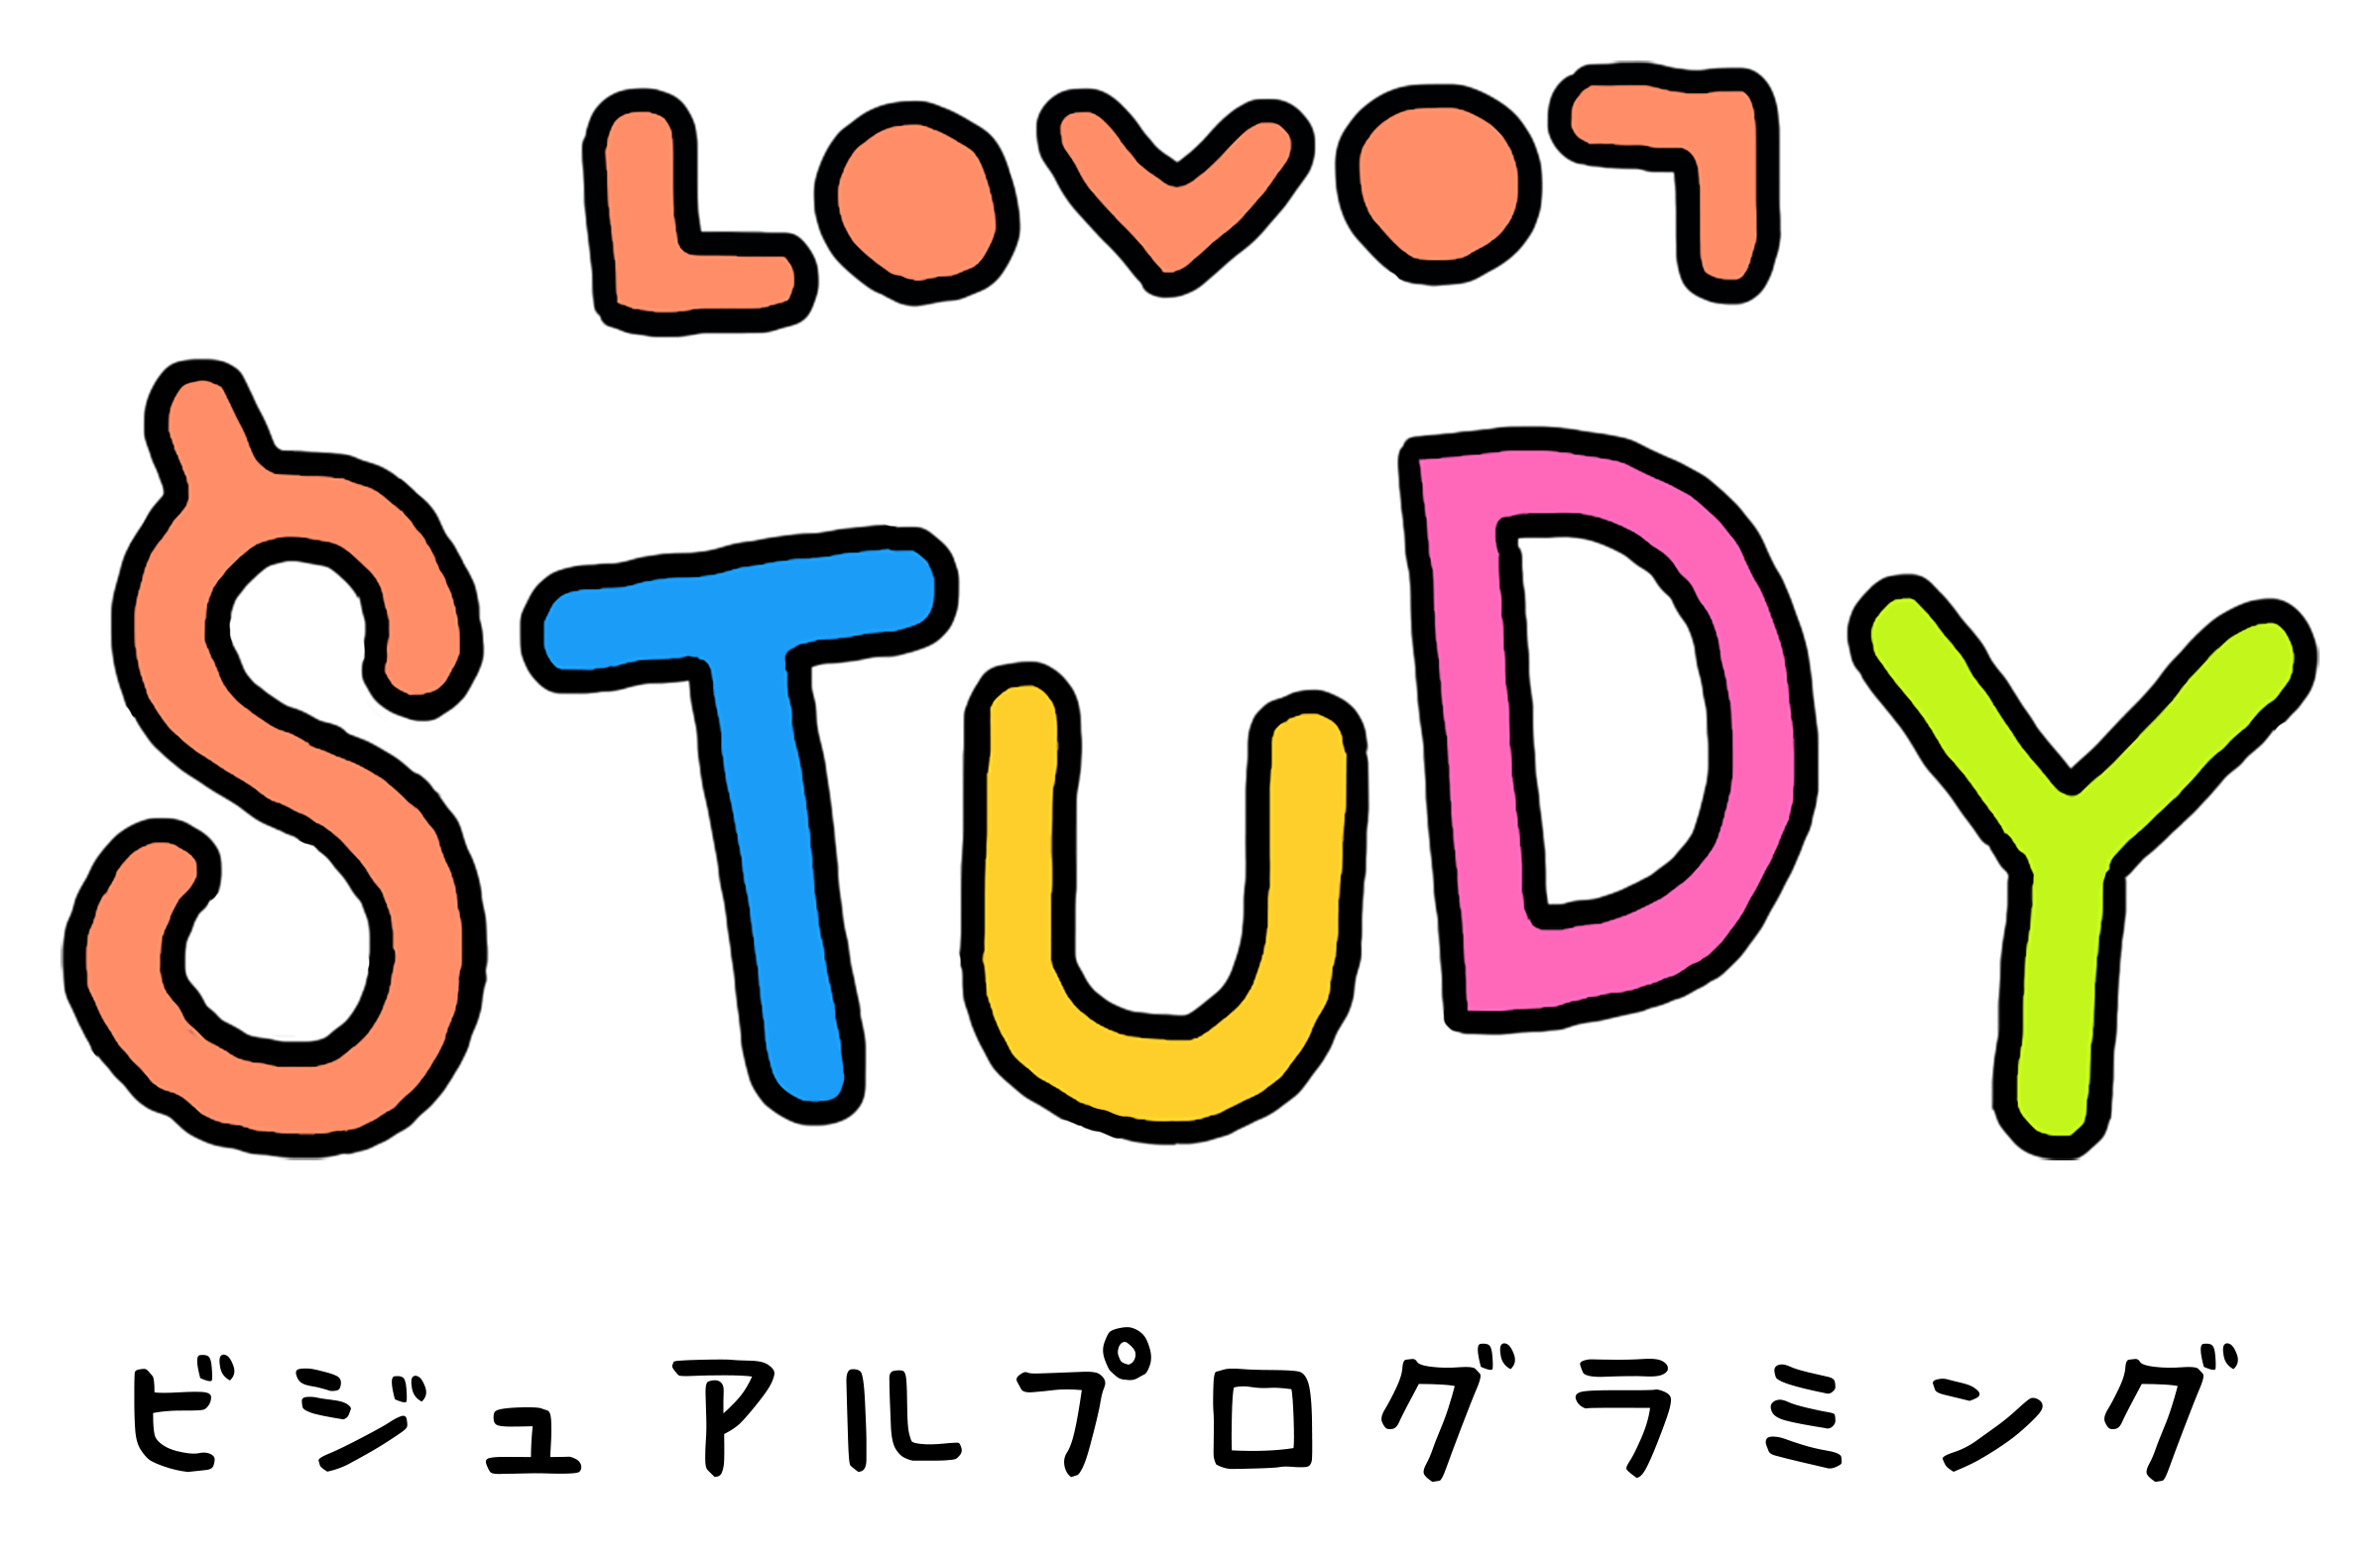 lovot study